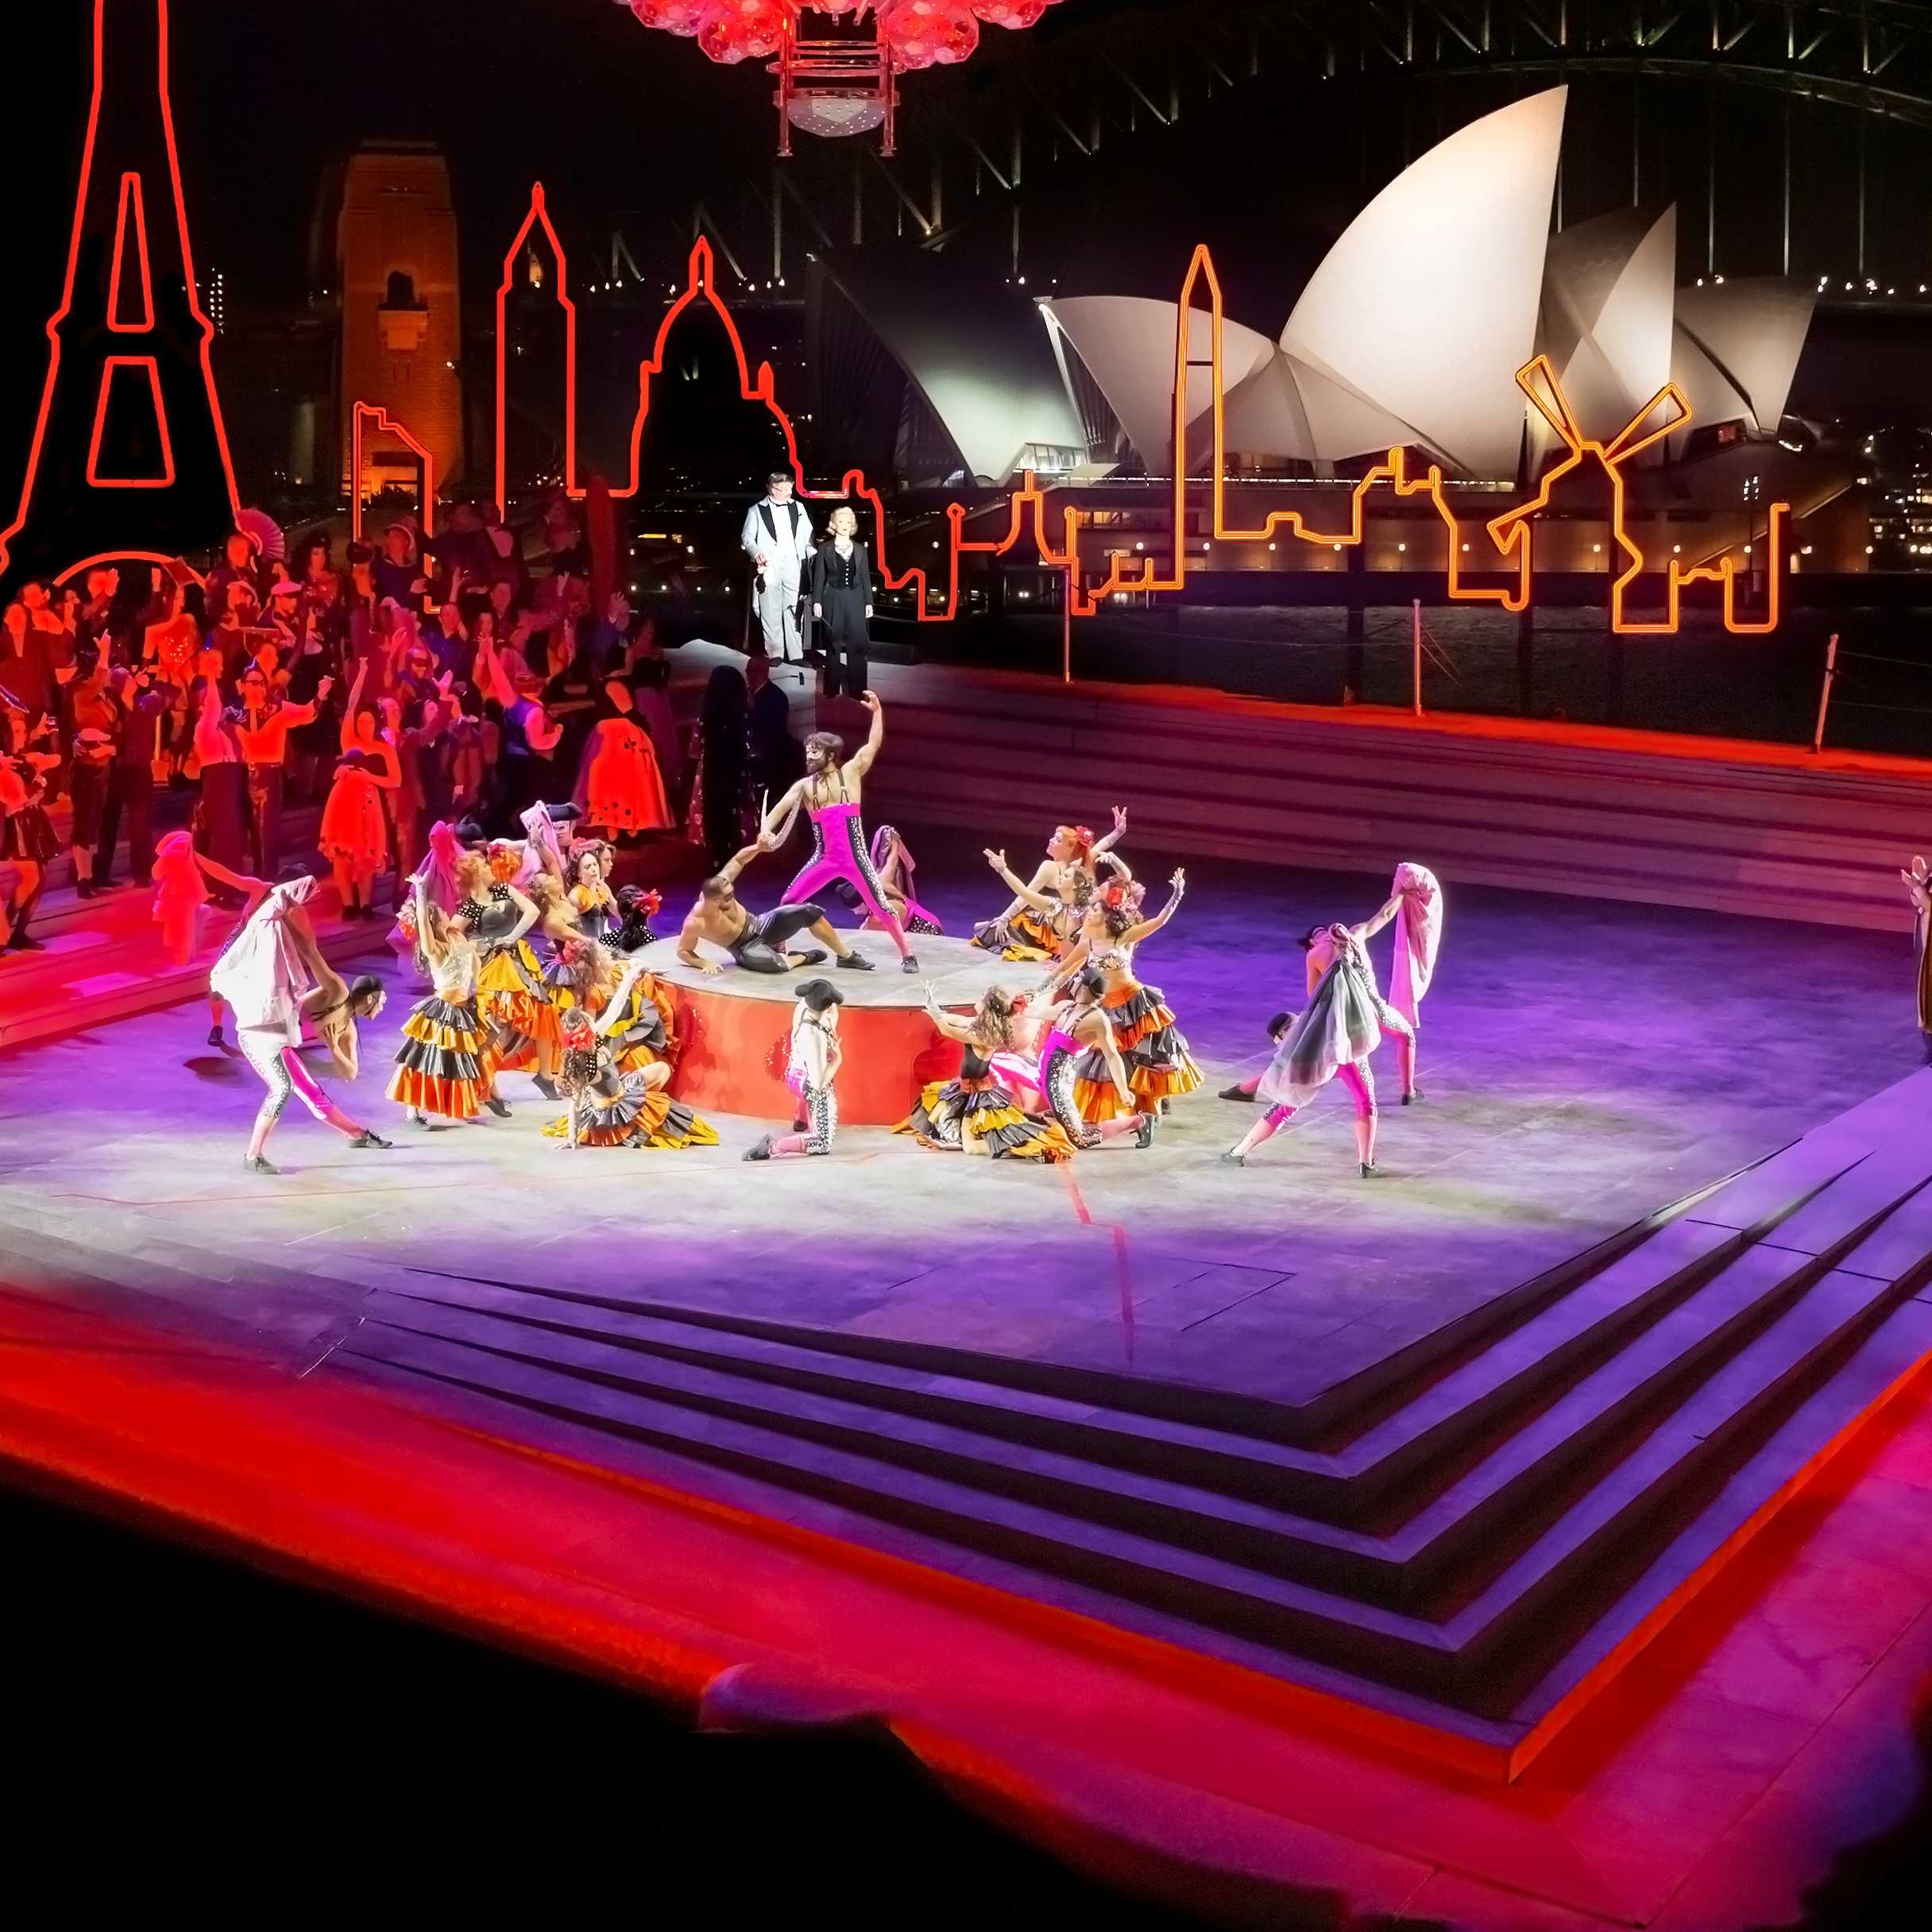 La Traviata in Sydney Harbour Image